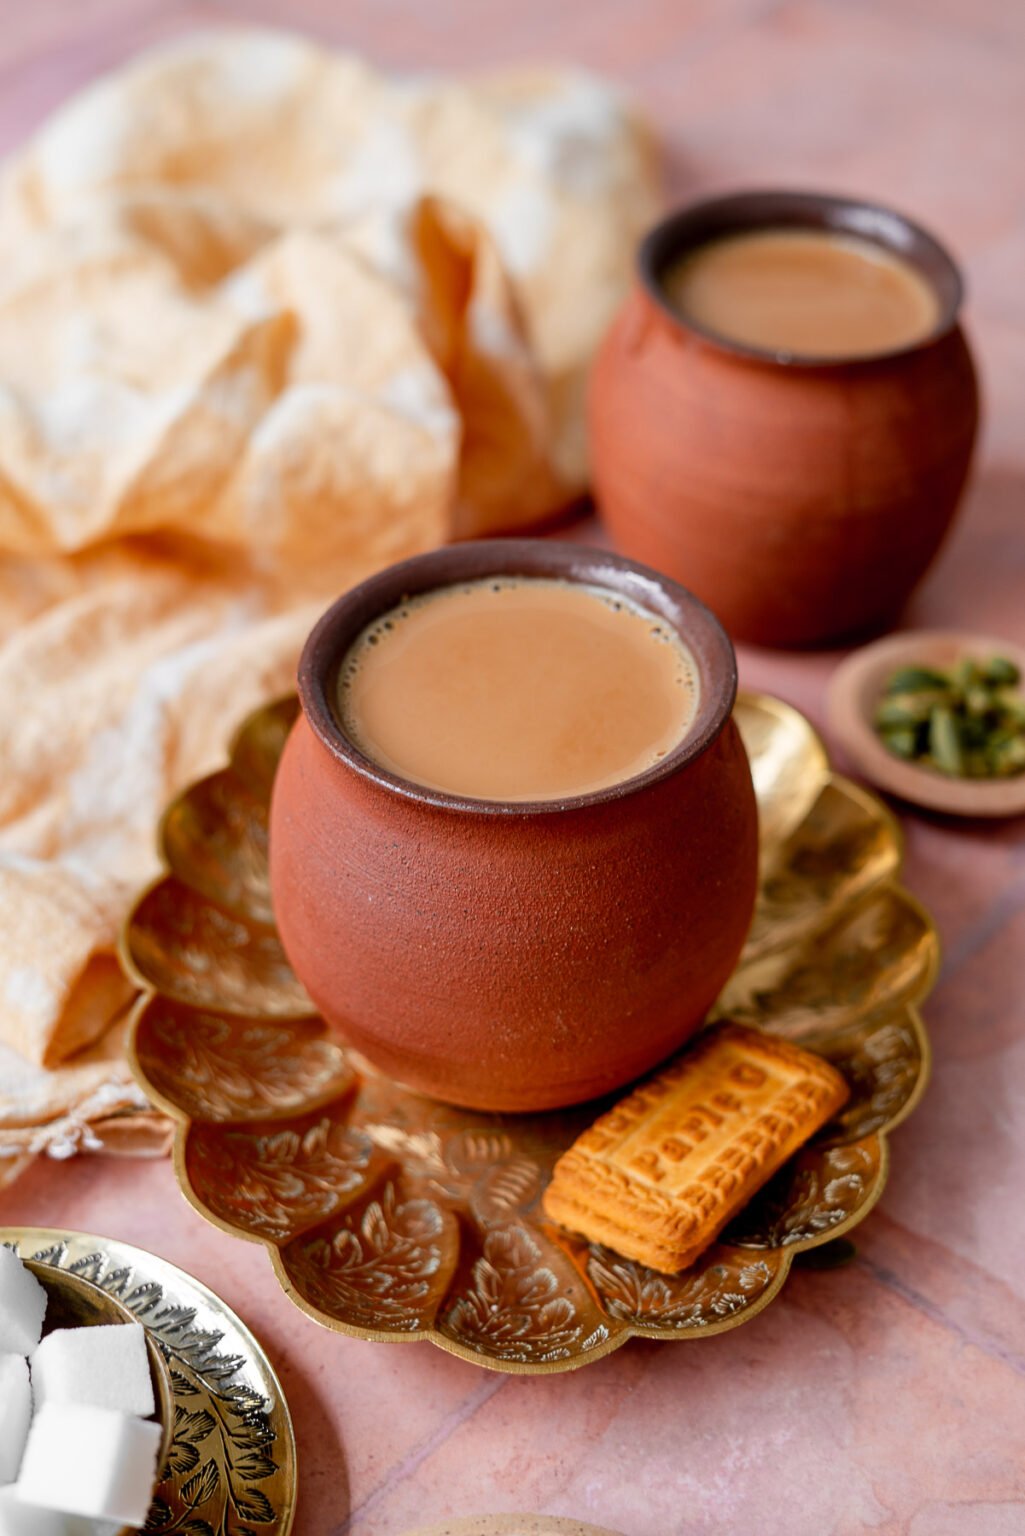 Authentic Indian Masala Chai (Spiced Milk Tea) - Masala and Chai